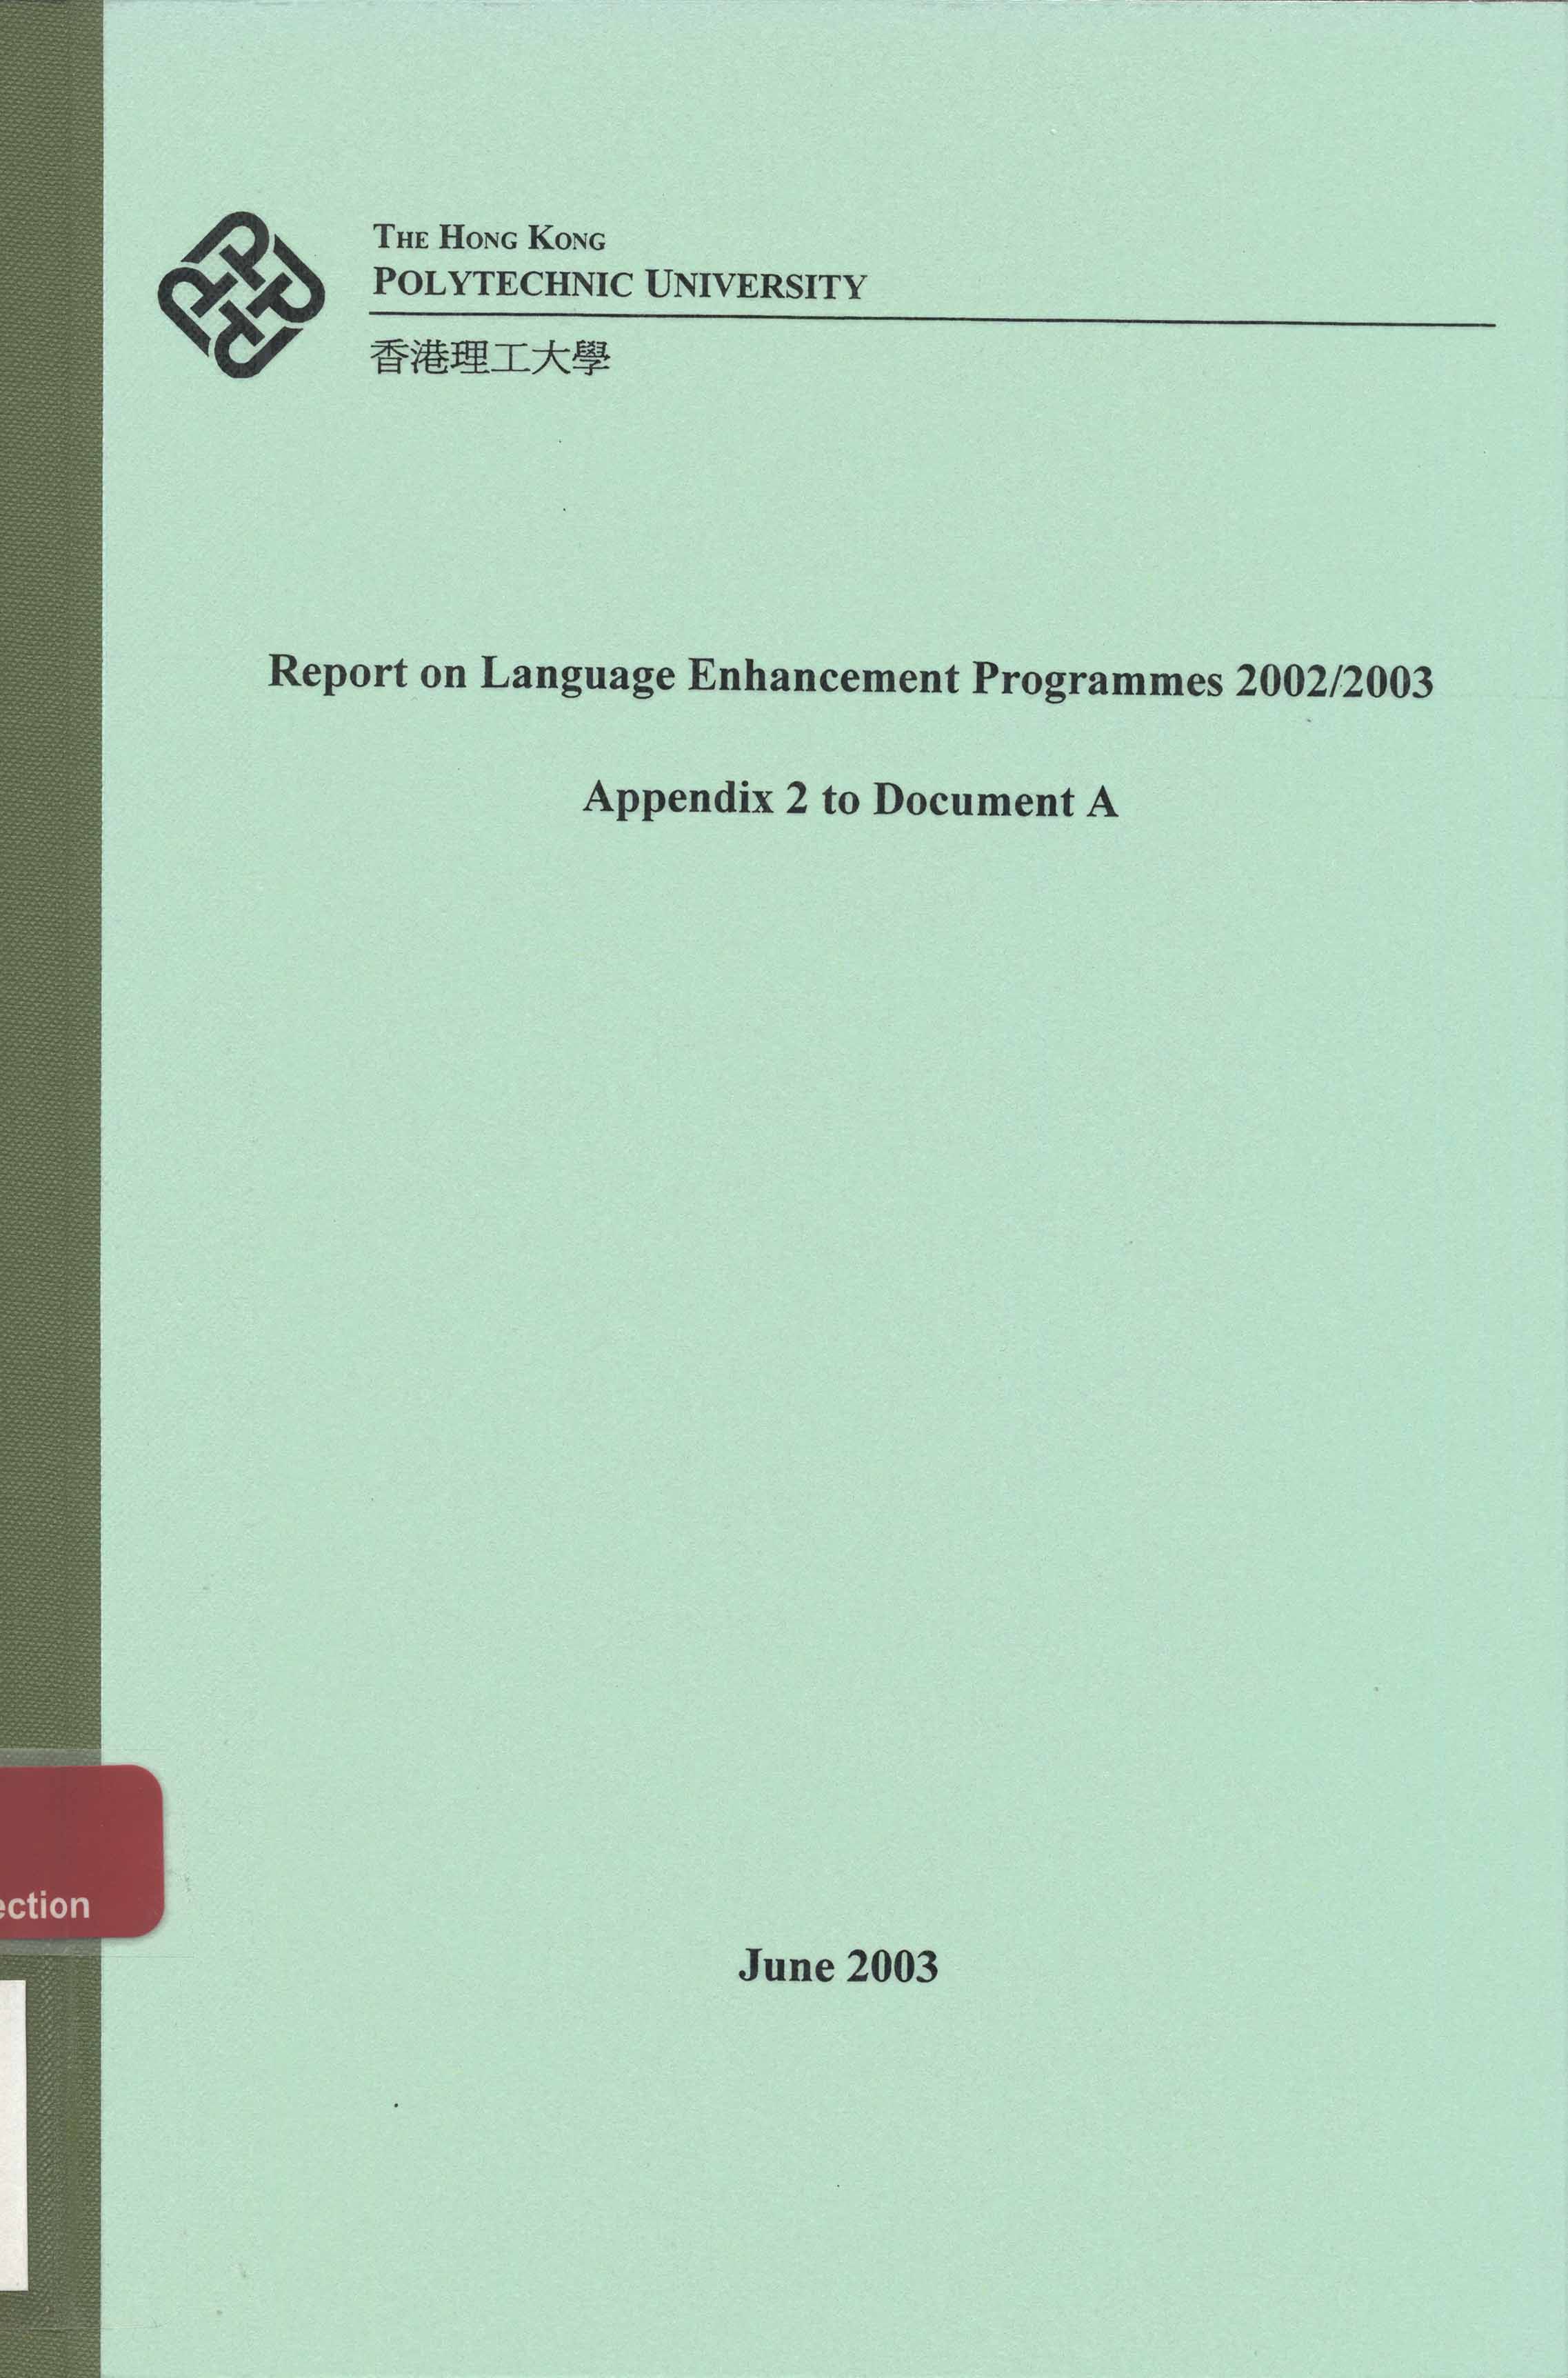 Report on language enhancement programmes 2002/2003 - Appendix 2 to Document A